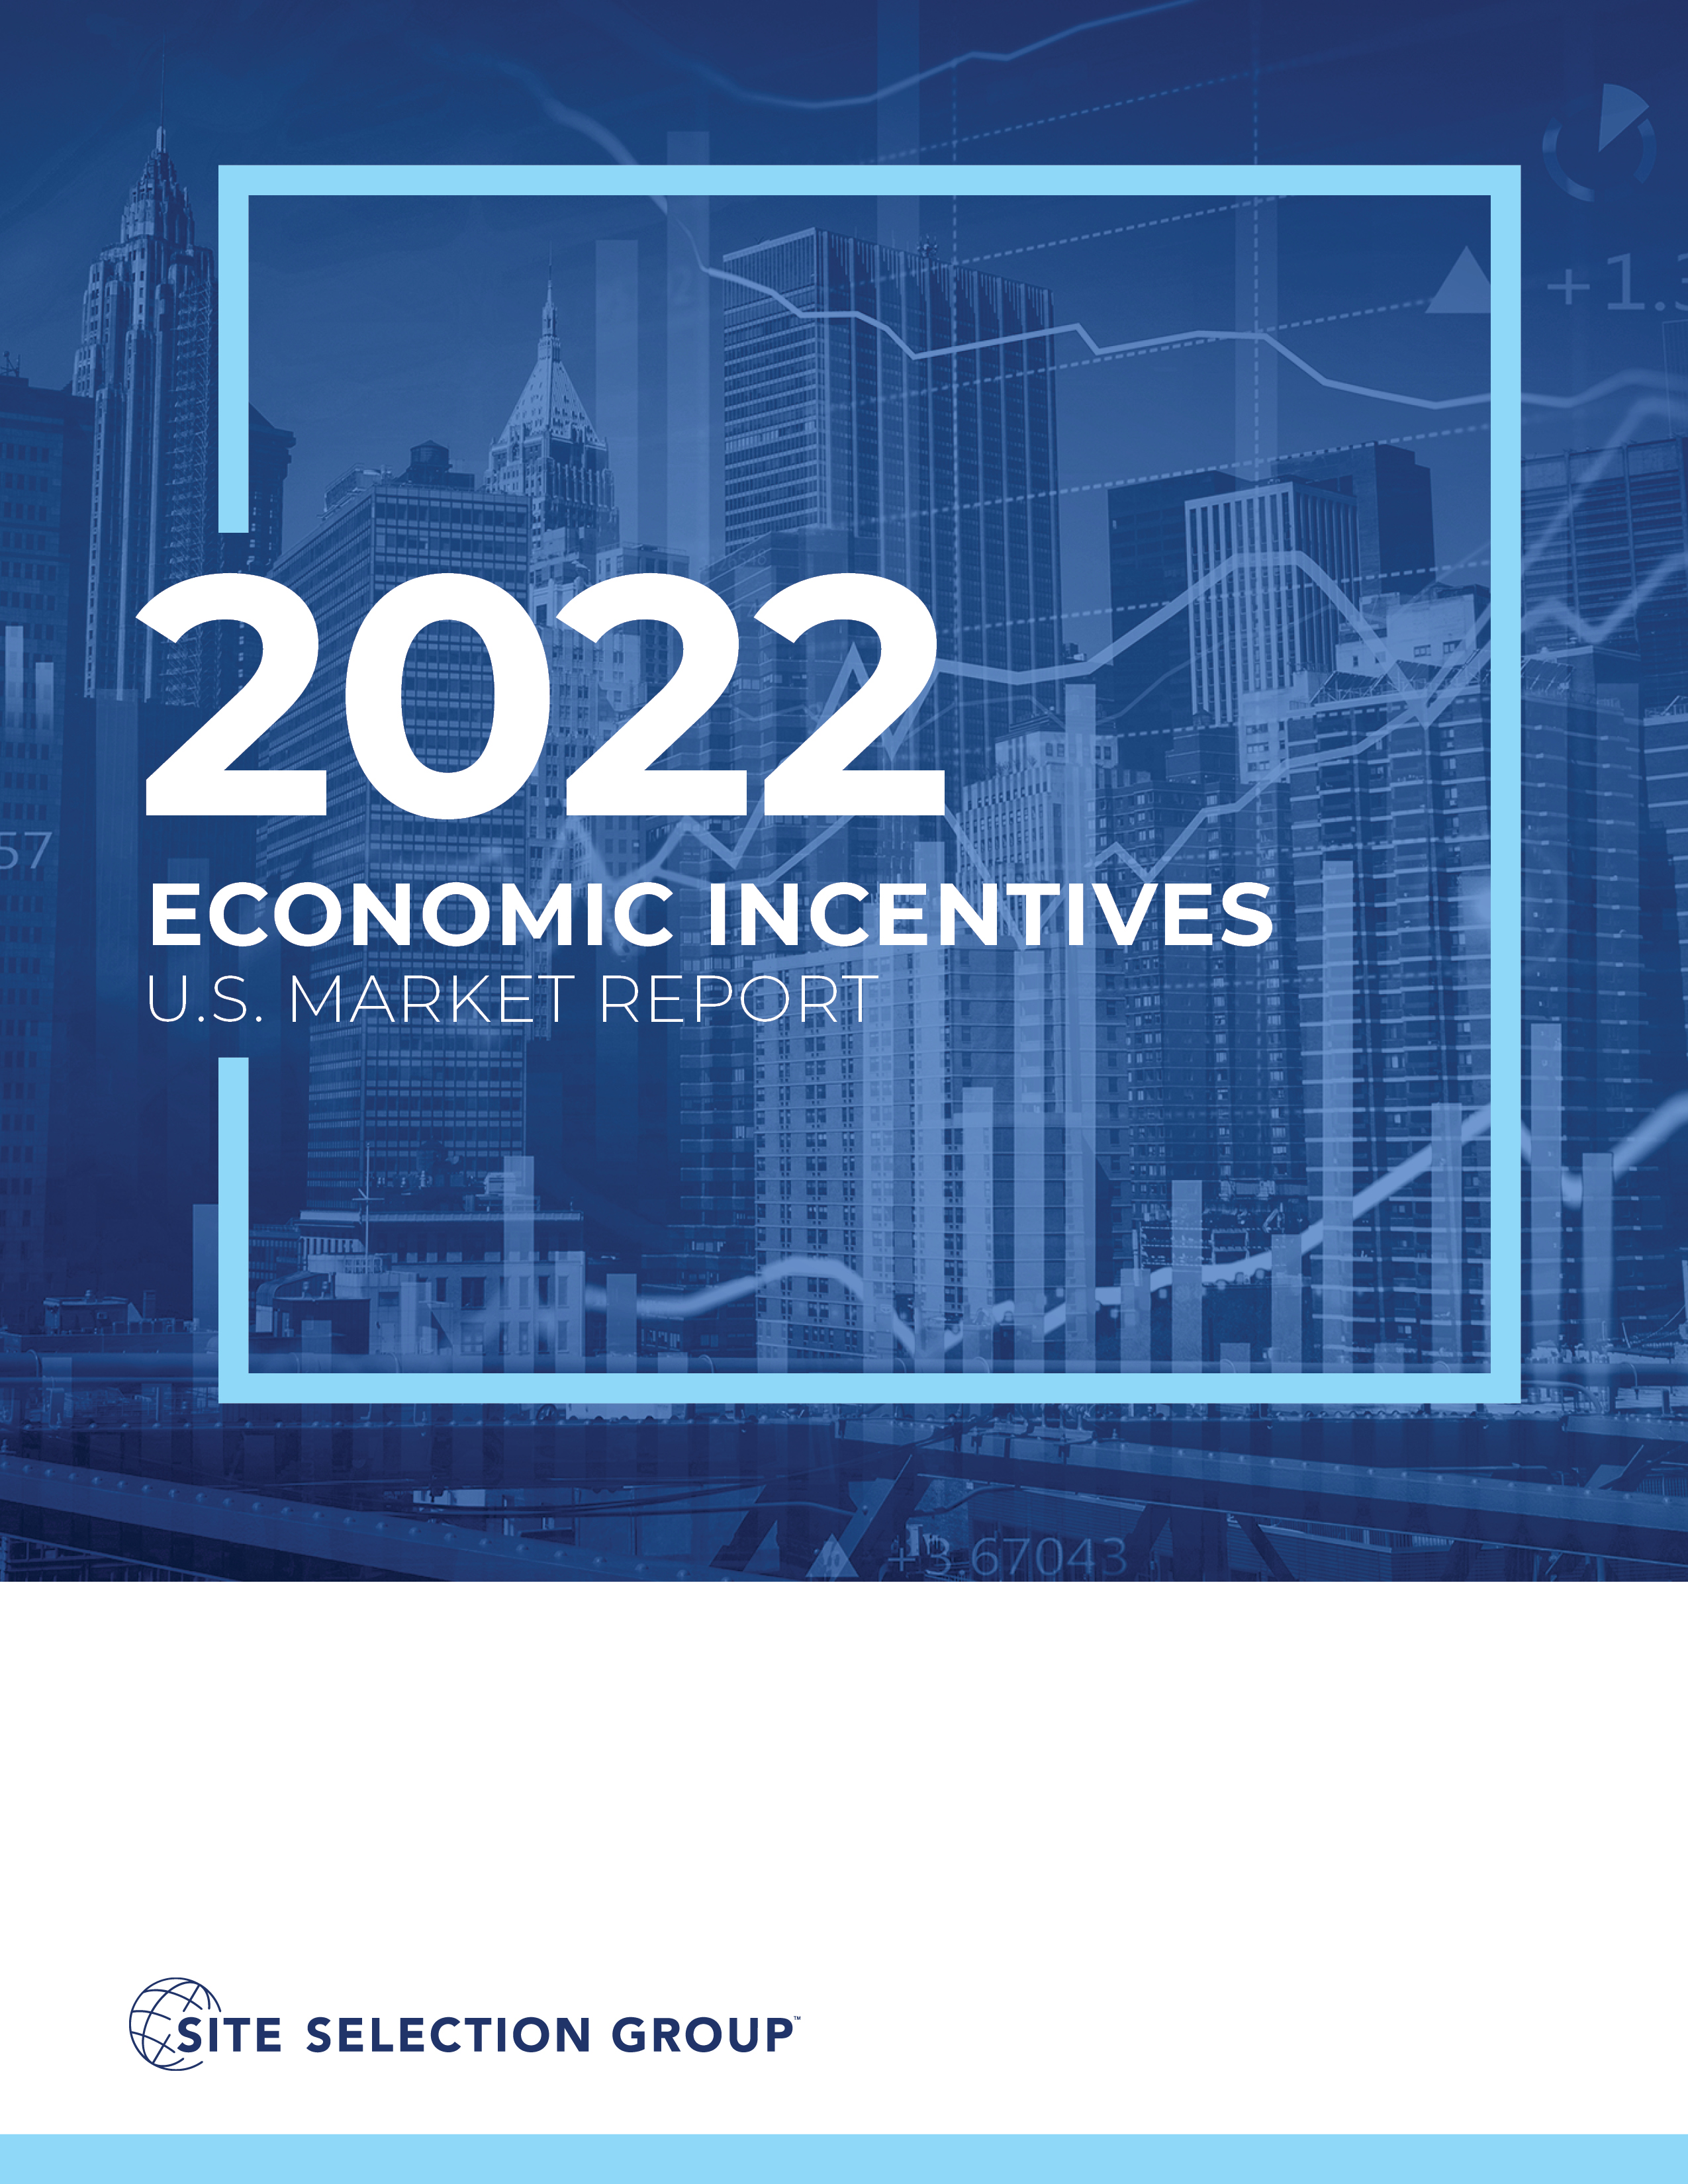 SSG-2022 Economic Incentives U.S. Market Report-Cover